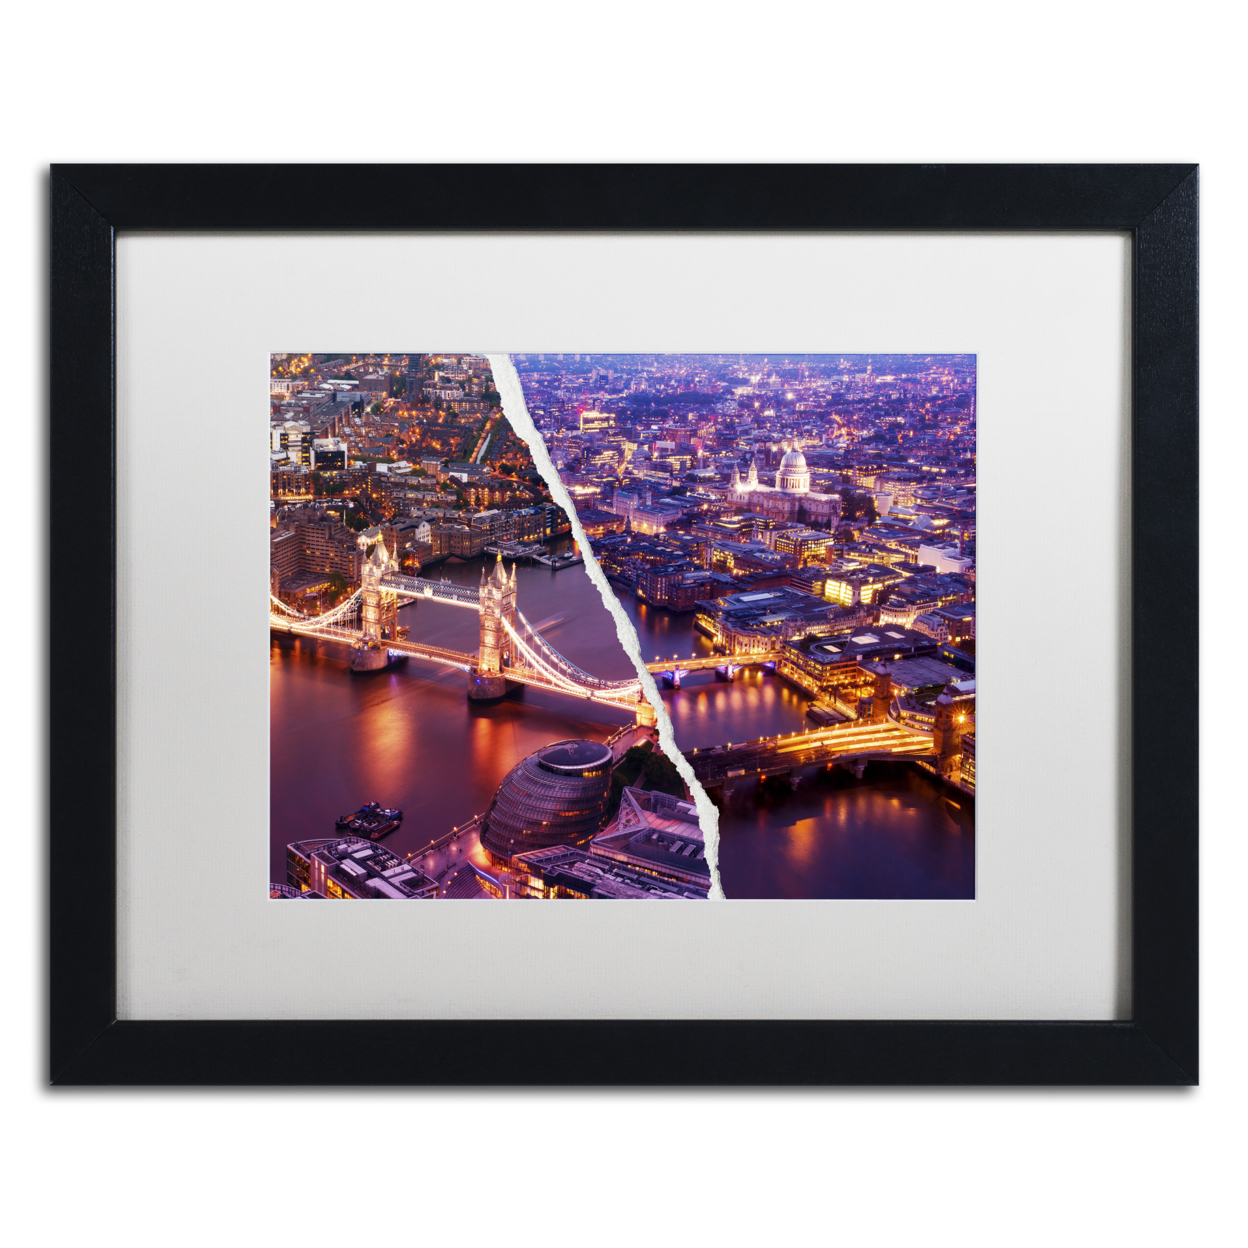 Philippe Hugonnard 'City Lights London' Black Wooden Framed Art 18 X 22 Inches